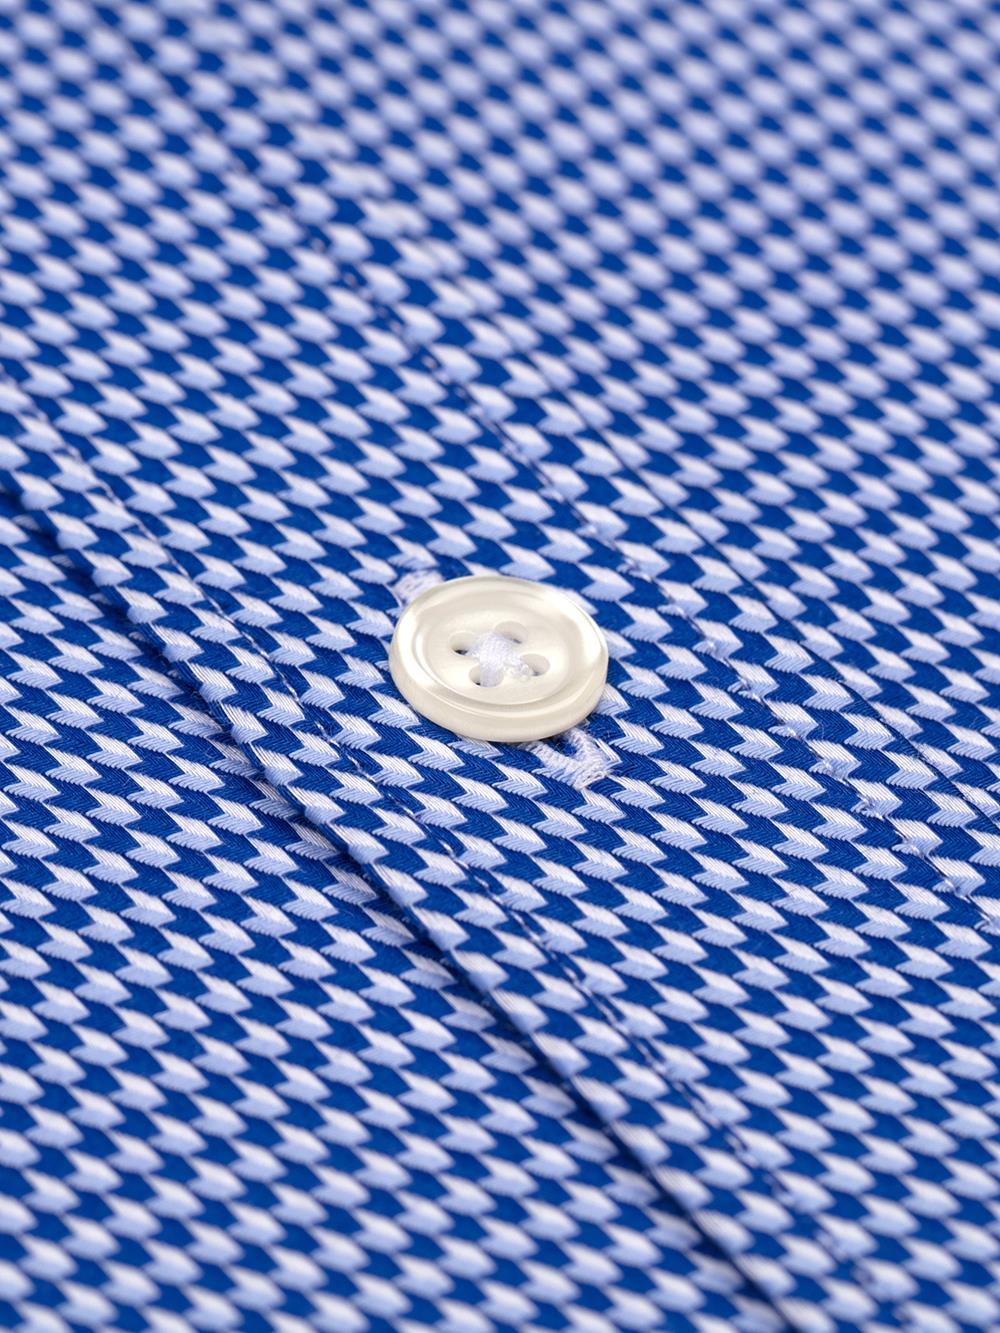 Max Slim Fit Shirt - Small Collar